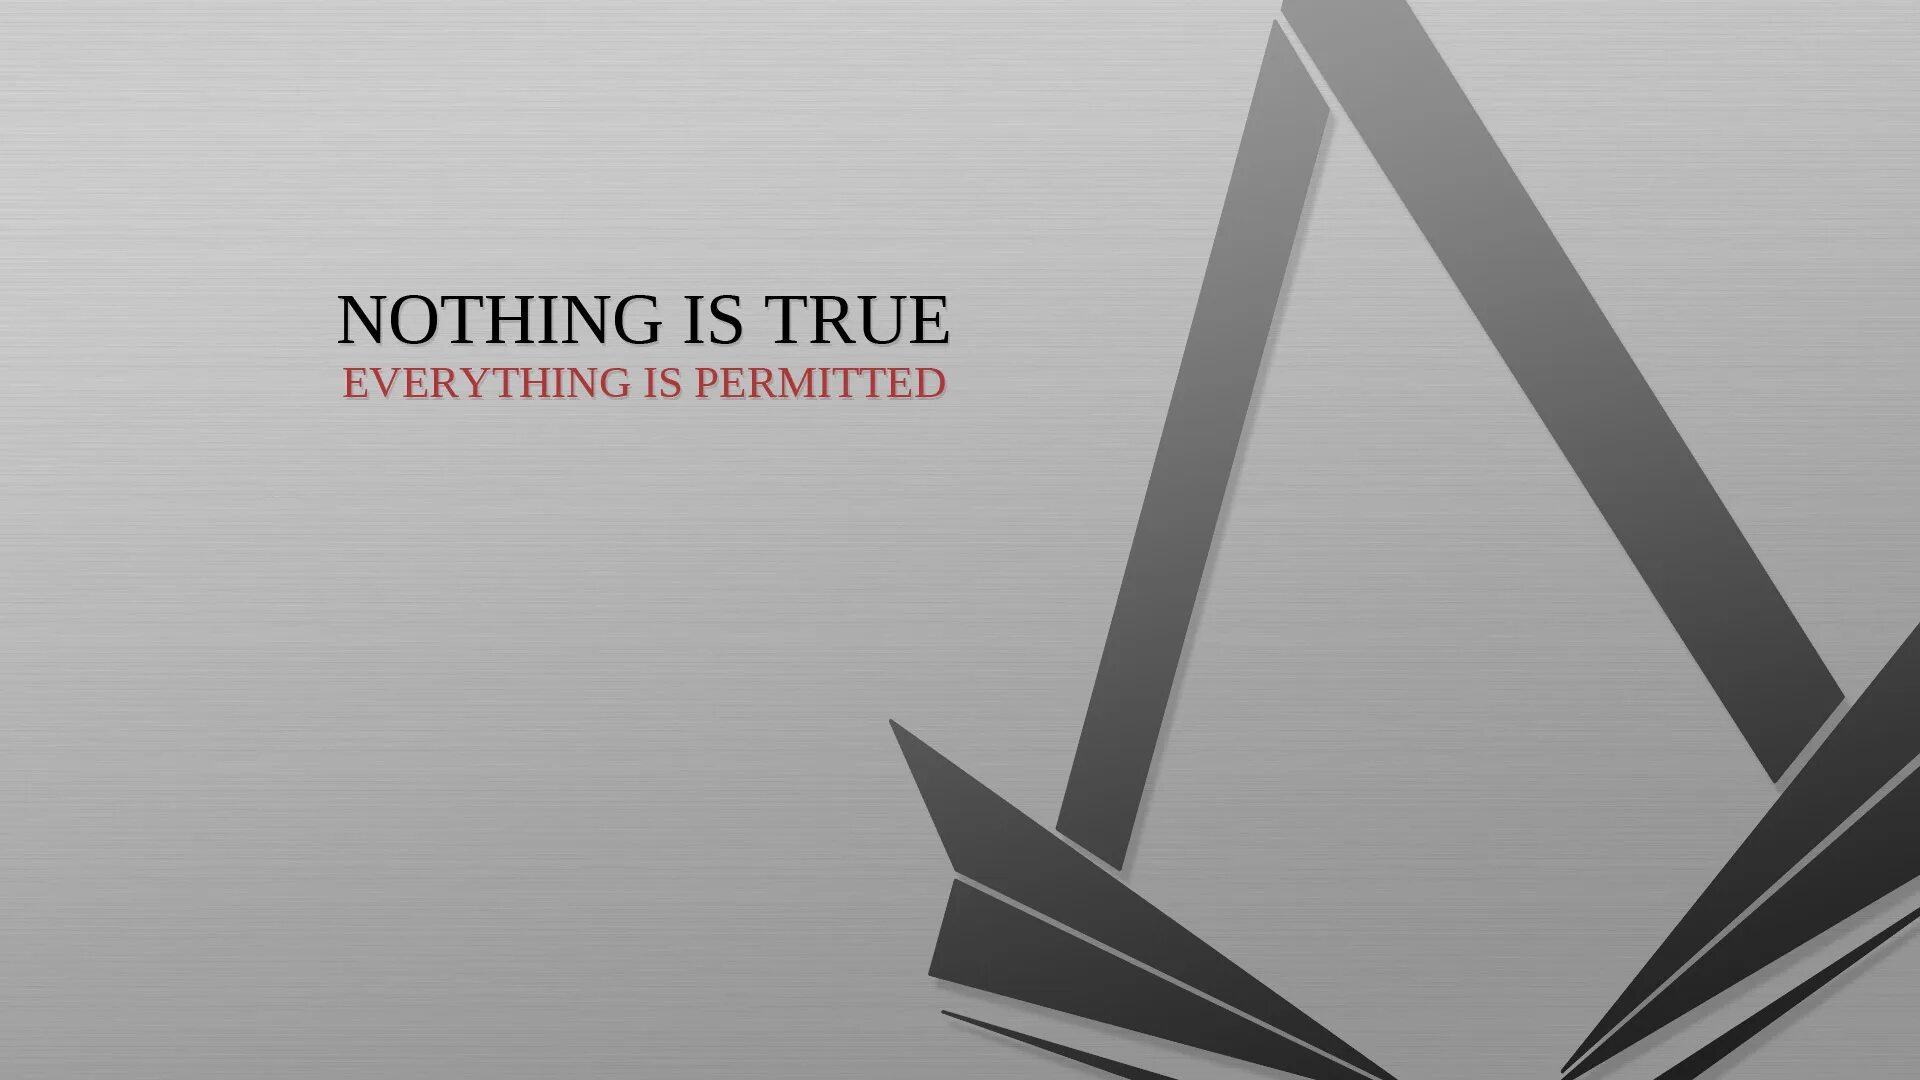 Нафинг фон 2а. Nothing is true everything is permitted. Assassins Creed 2 Brotherhood обои. Nothing true everything permitted. Обои Минимализм ассасин.